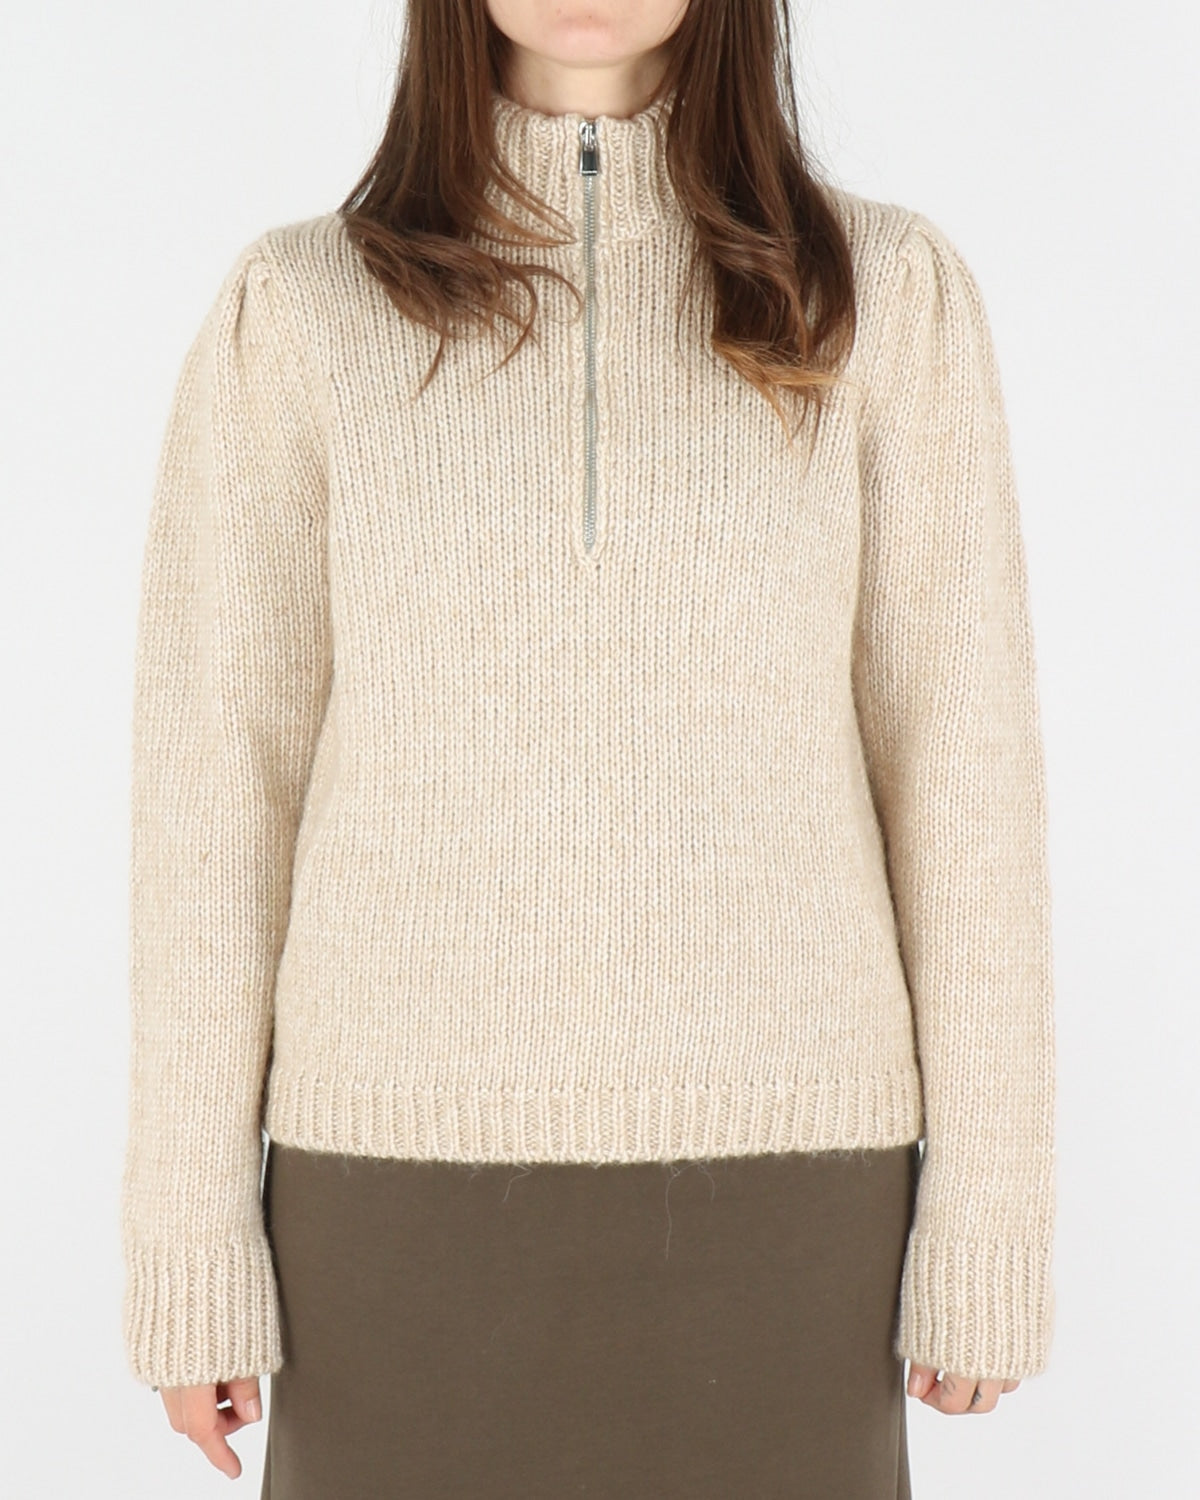 blanche_mouline sweater knit_brazilian sand_1_3